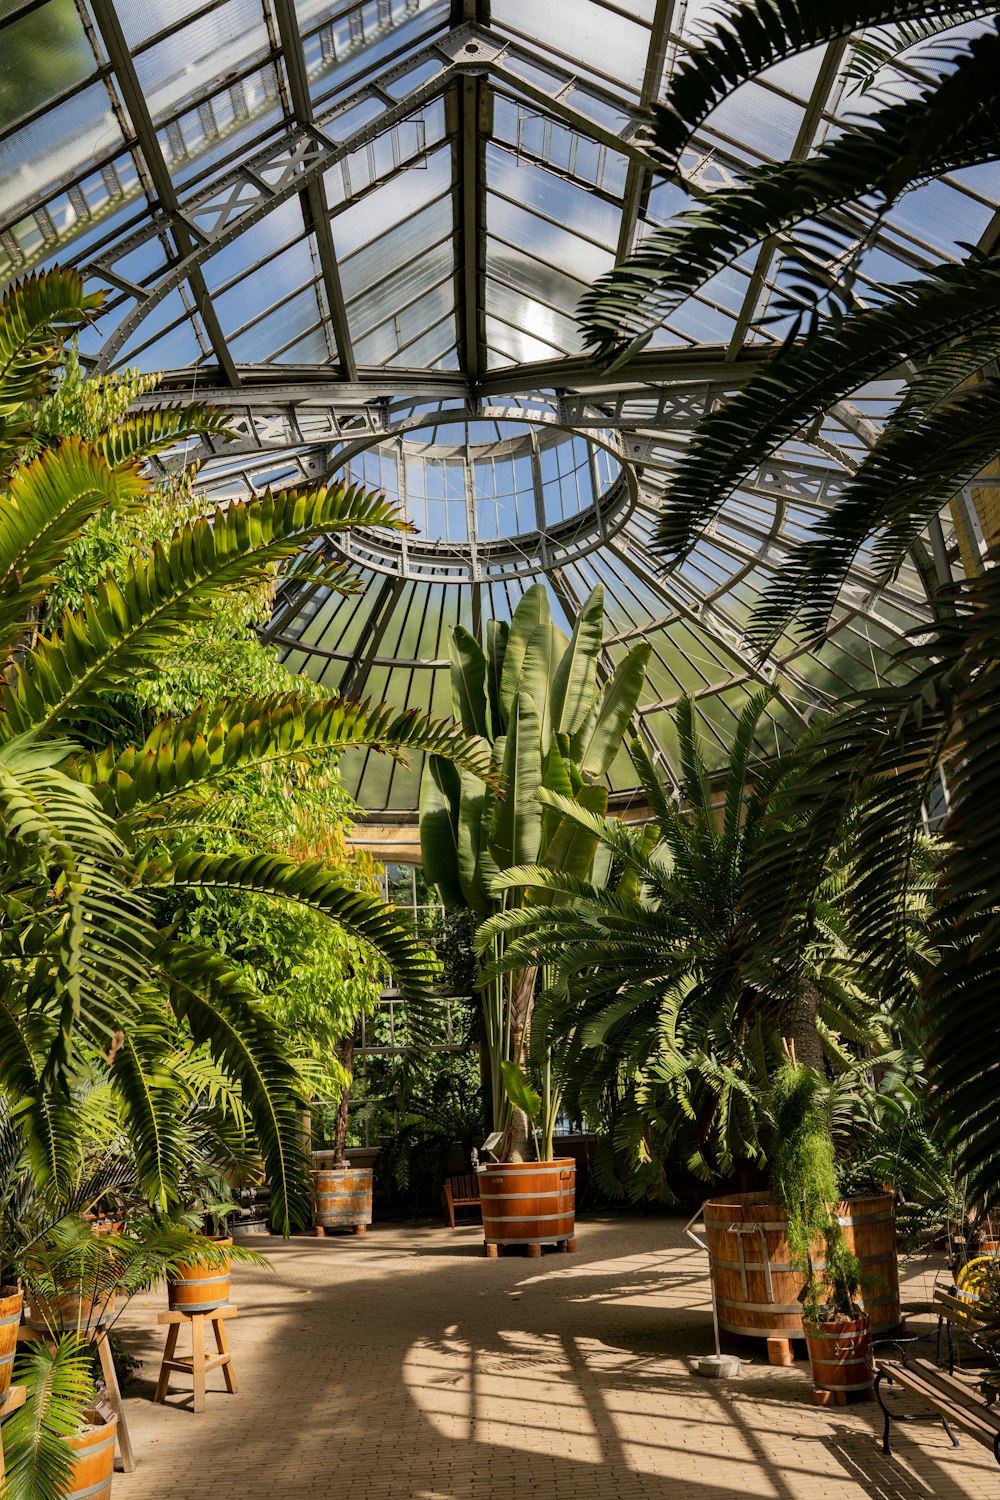 a large indoor planter garden